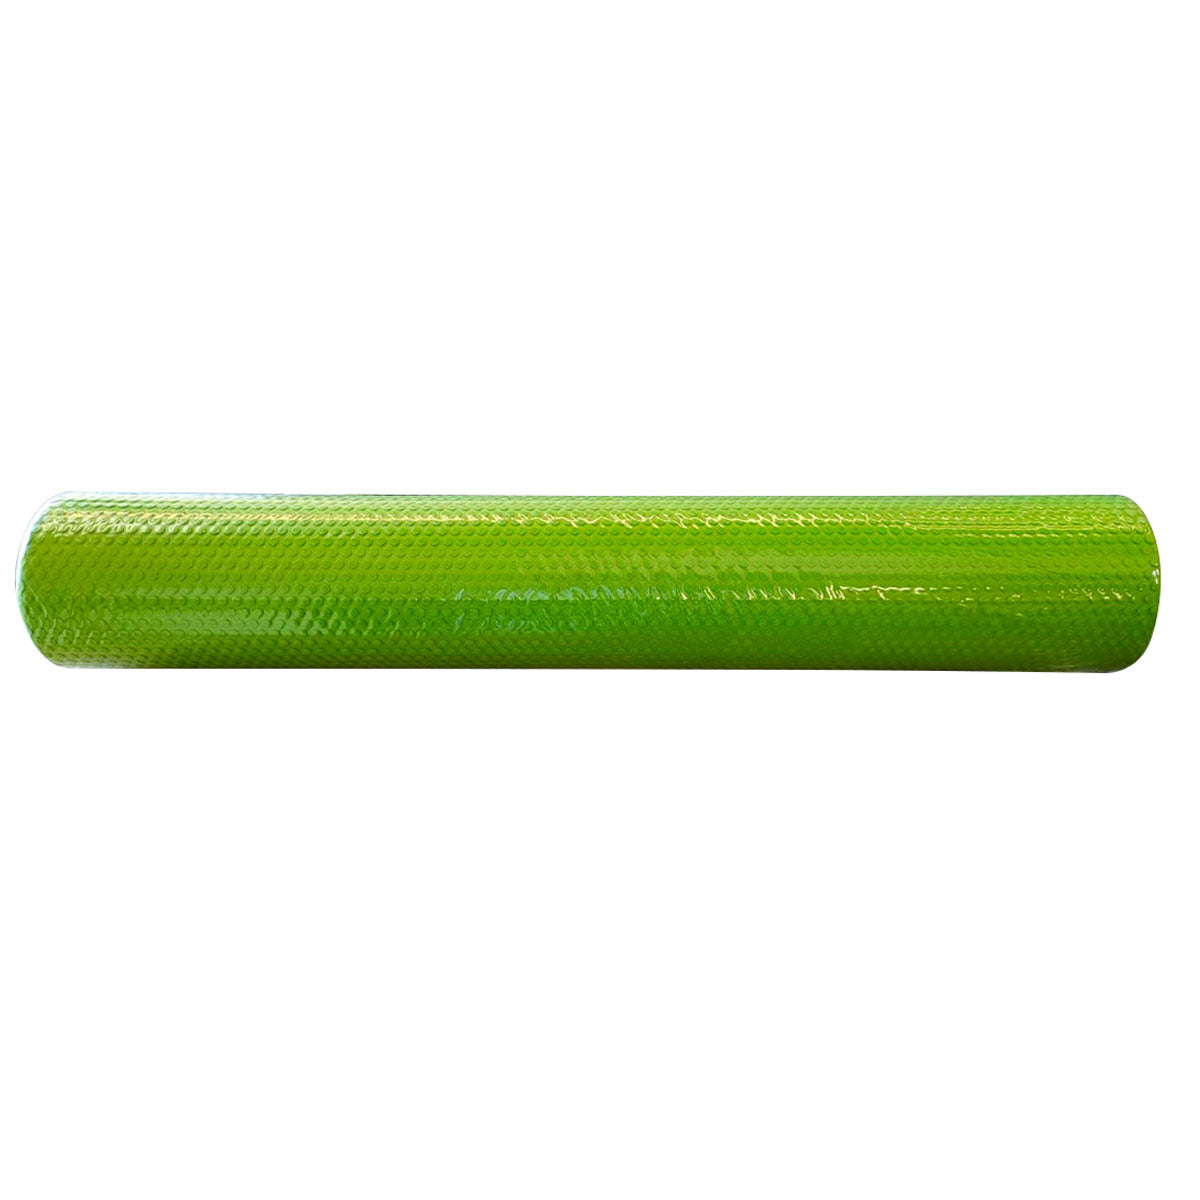 90cm Yoga Foam Green